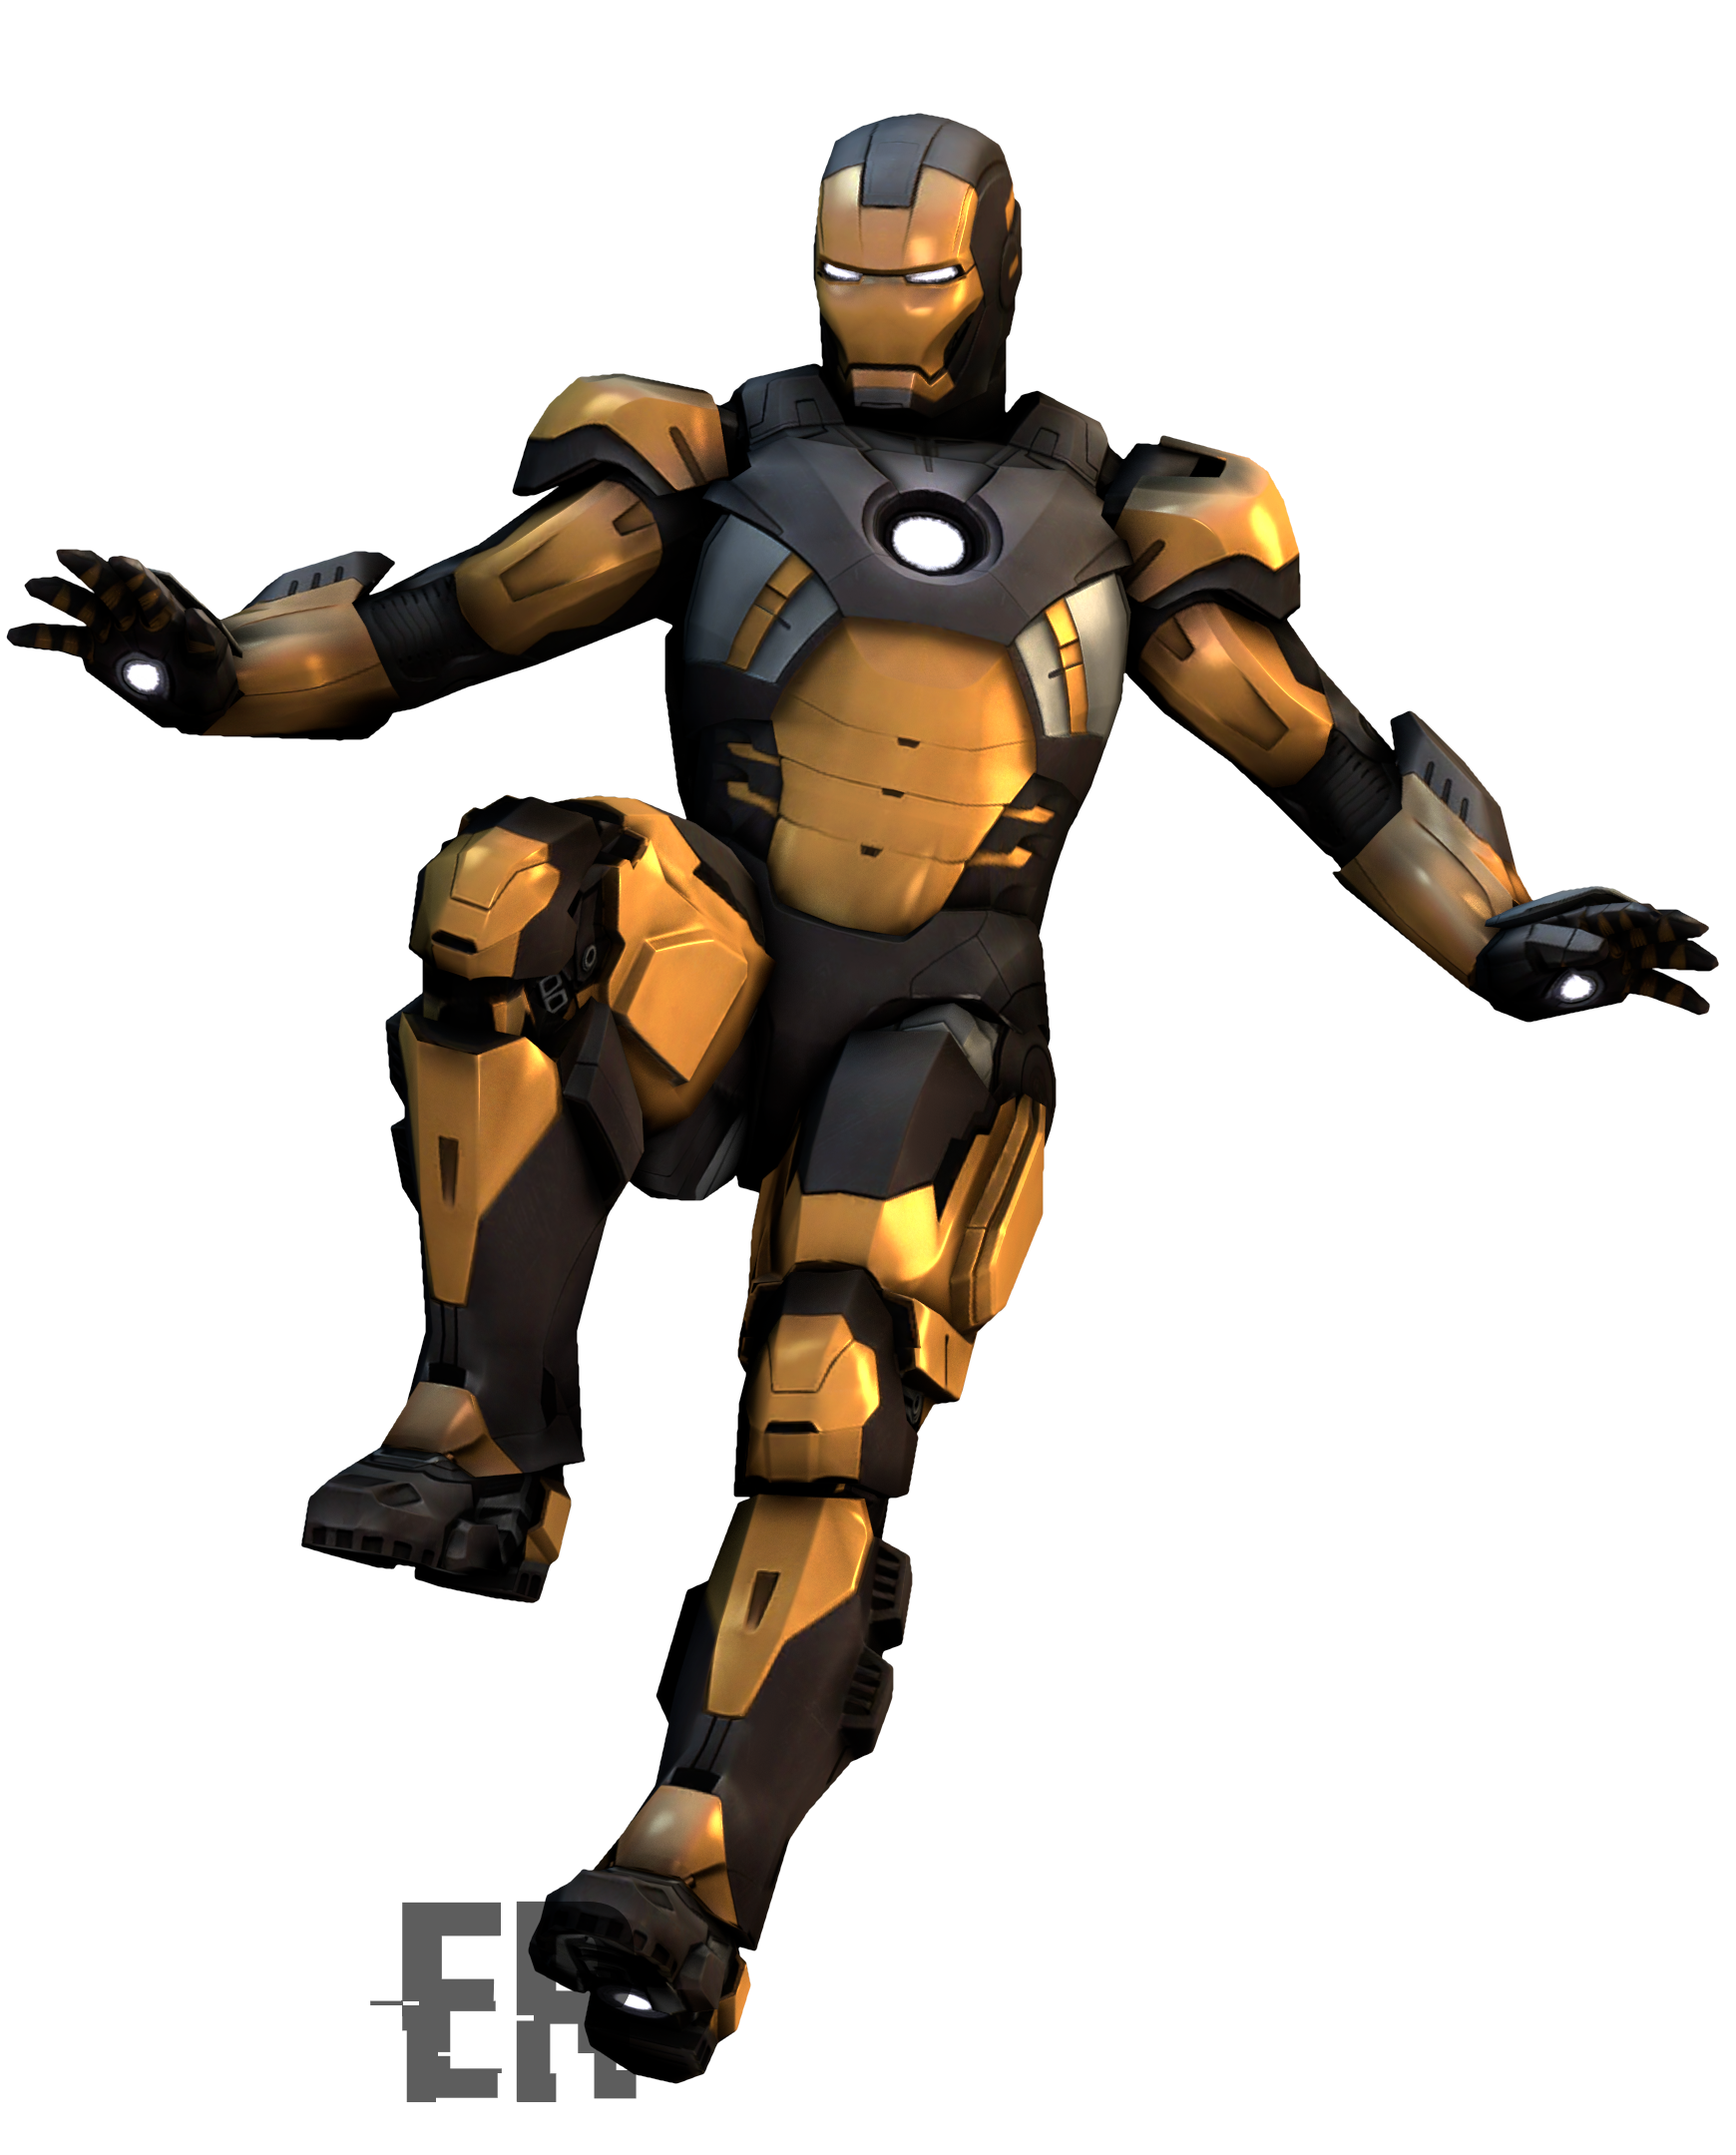 Marvel SFM] Iron Man Mark XX 'Python' by EliteRobo on DeviantArt